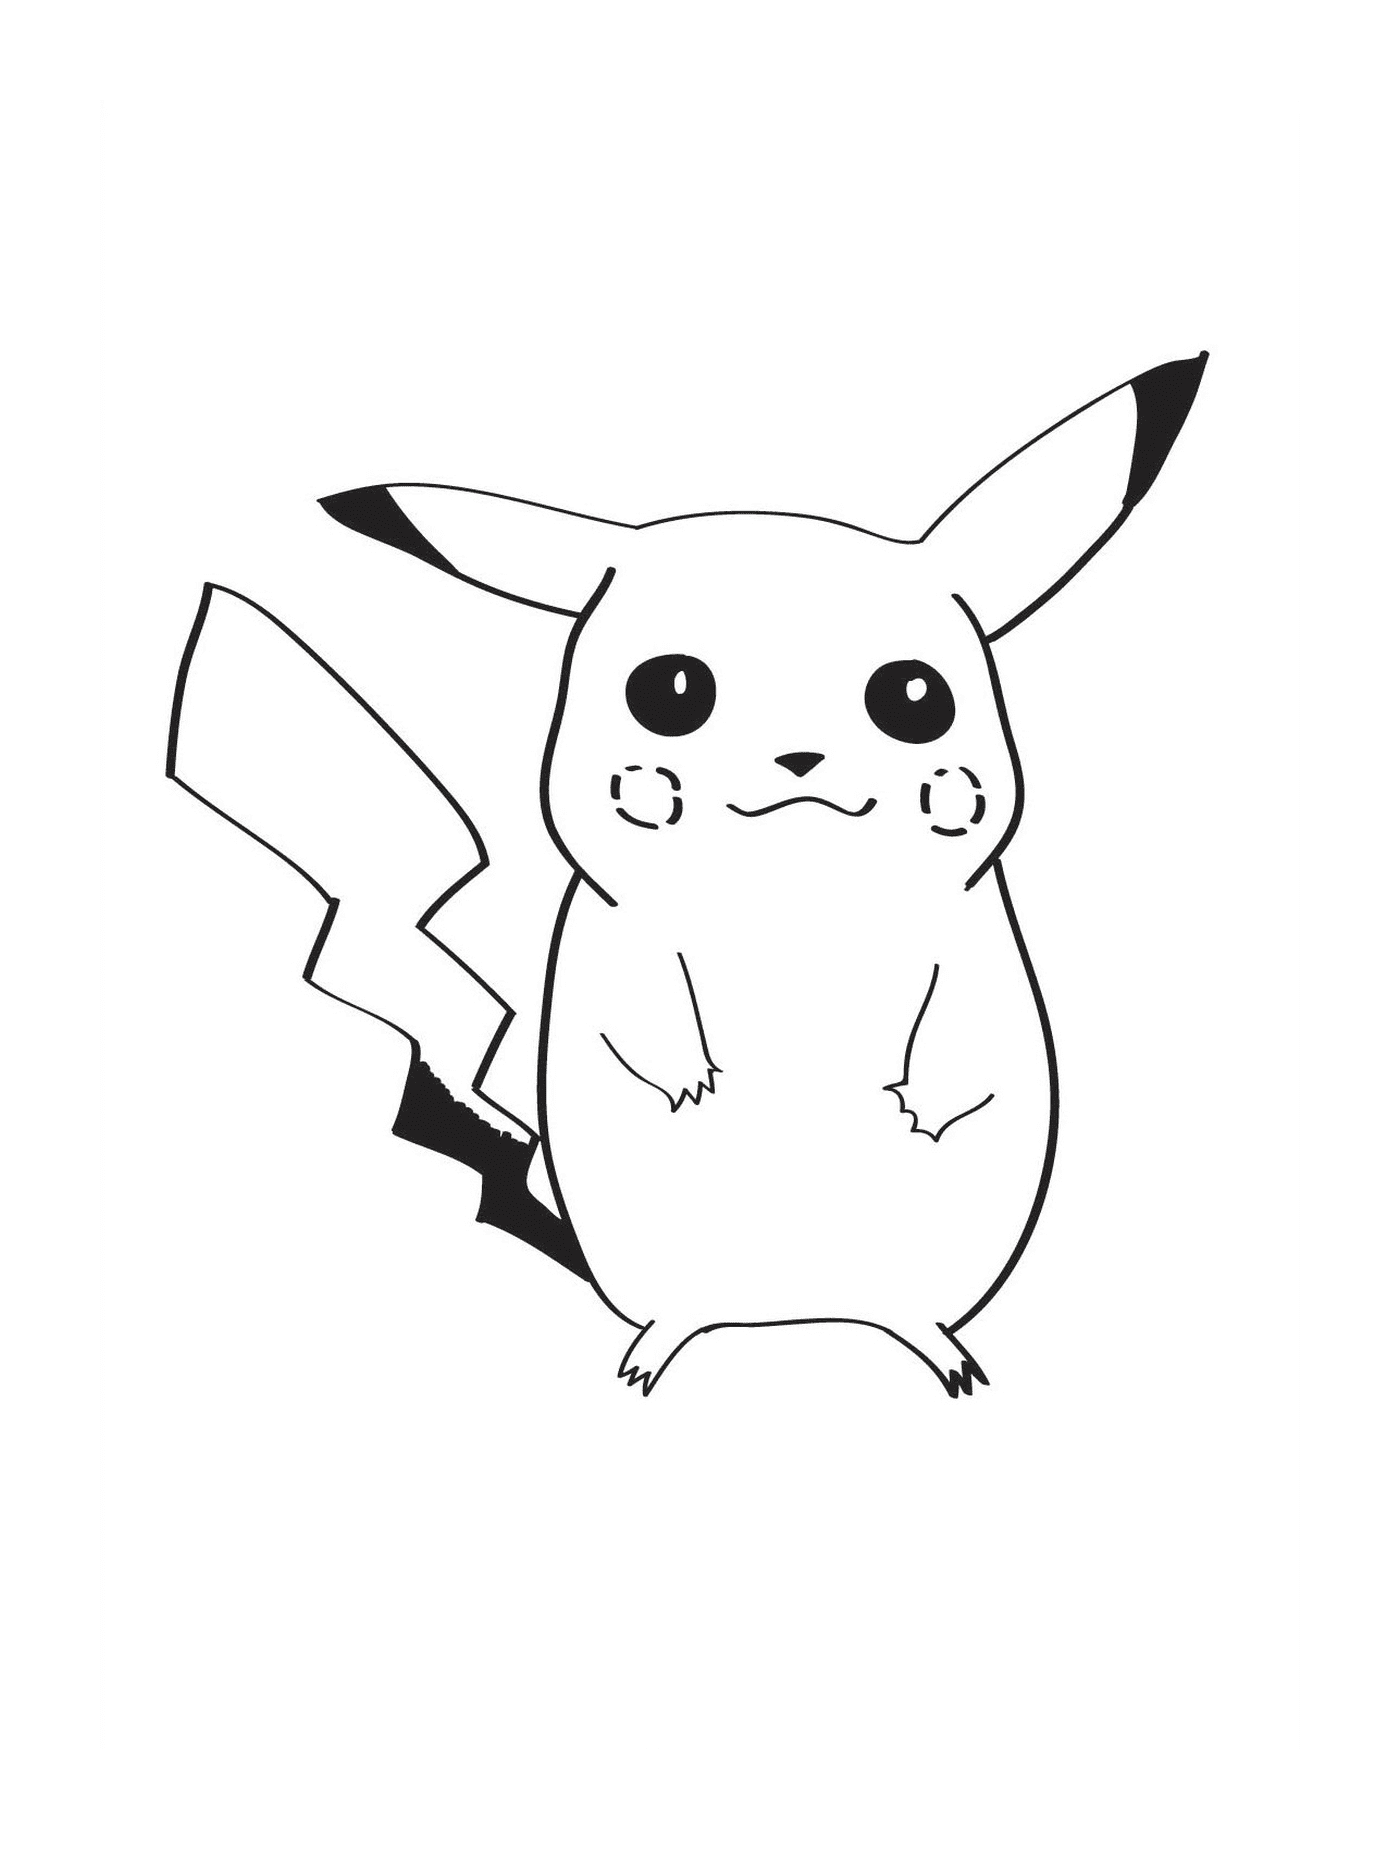  Pikachu, adorabile creatura 